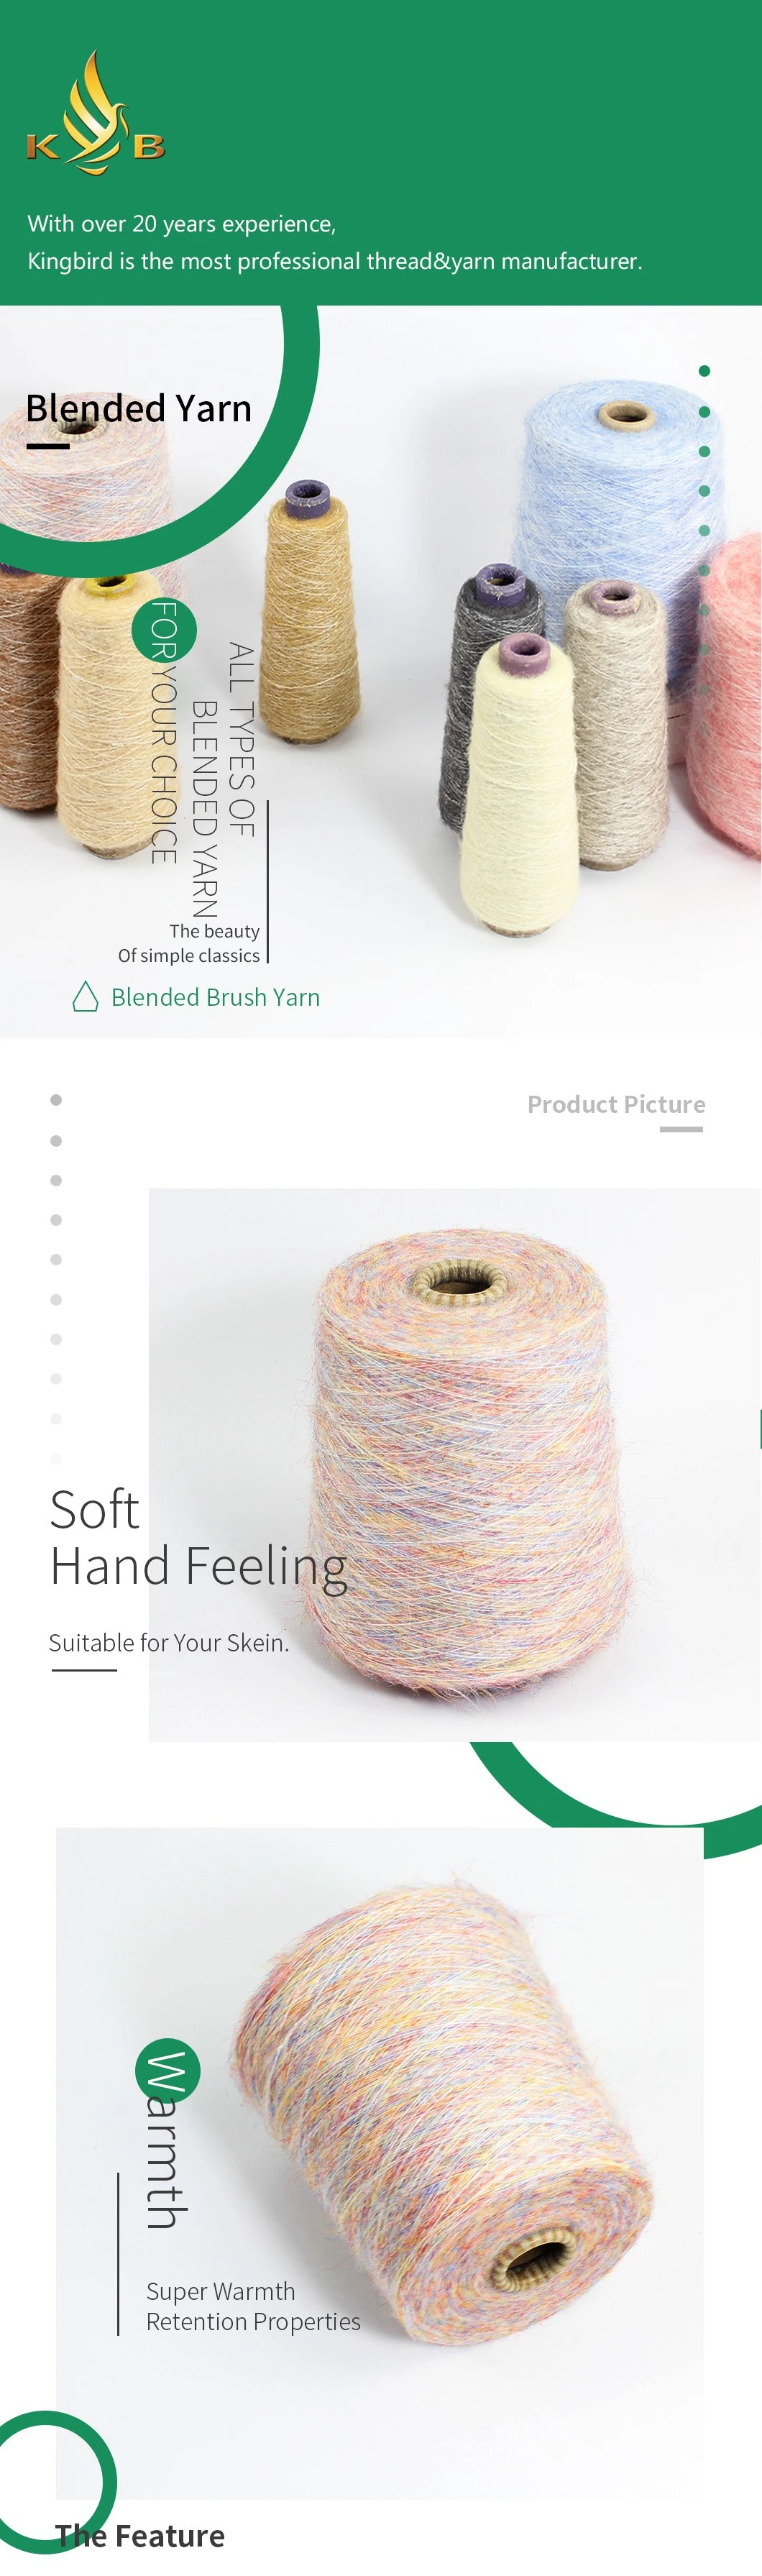 Soft Mohair Wool Brushed Knitting Yarn